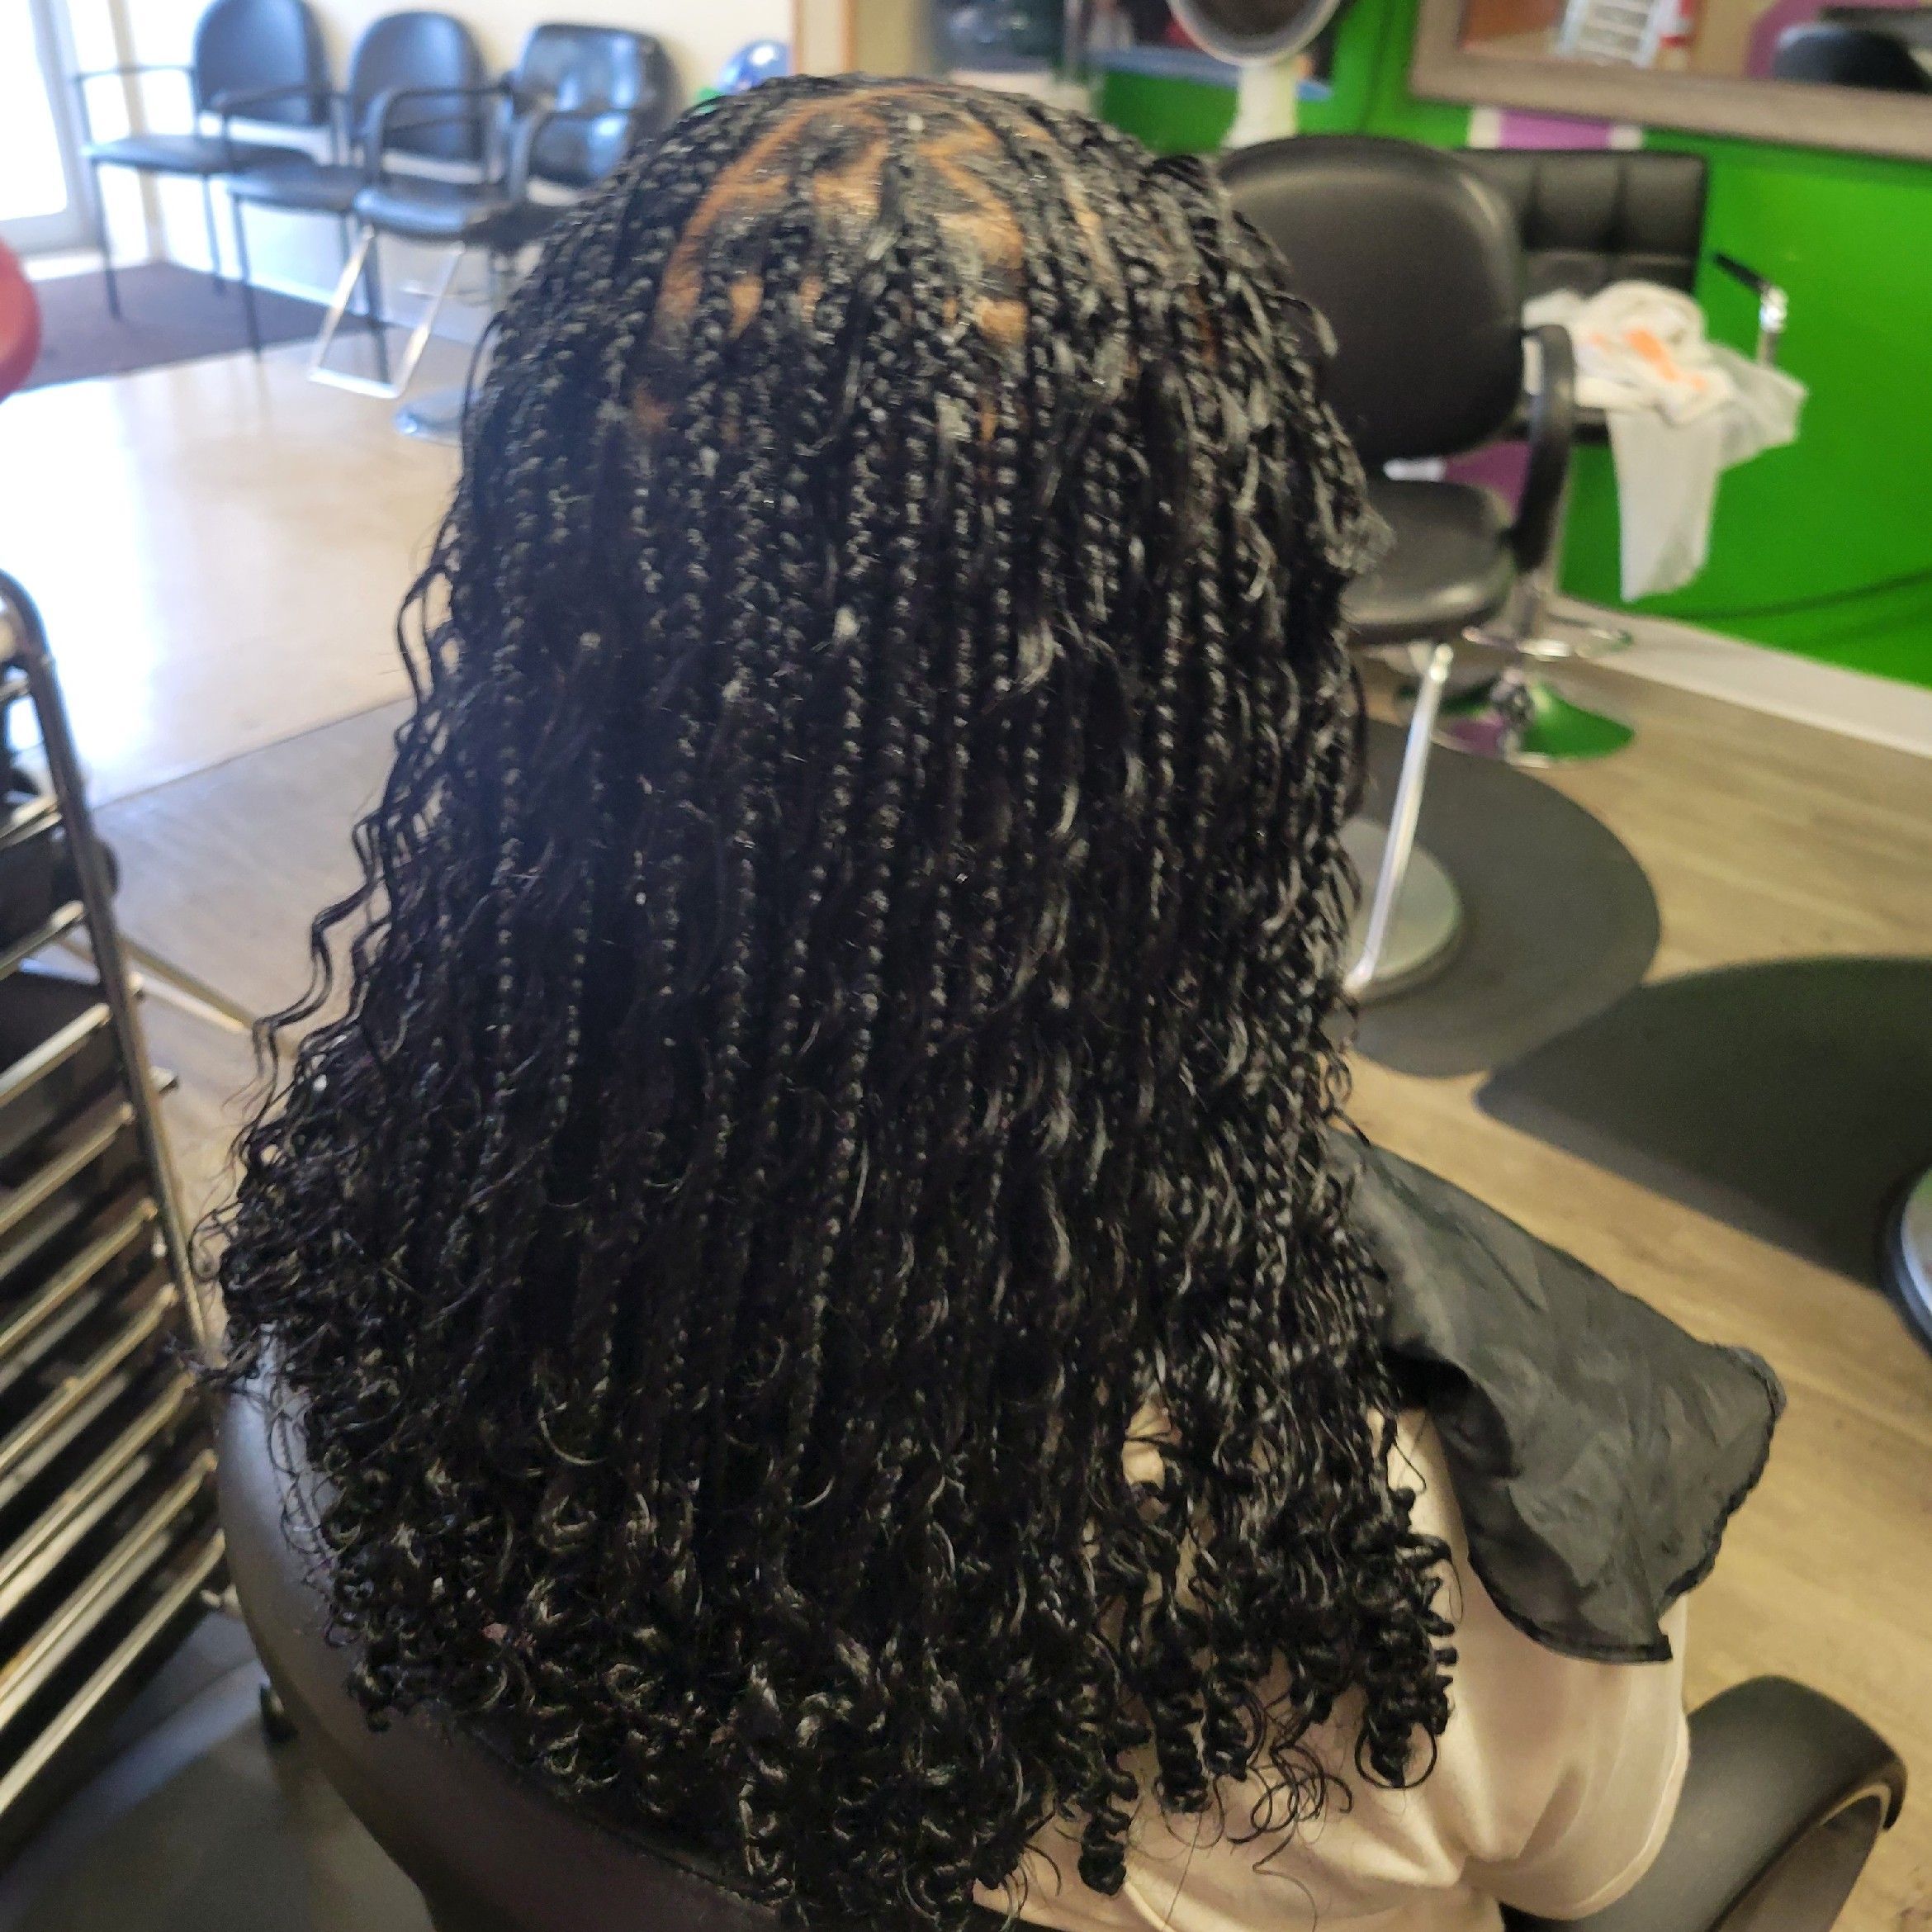 Angel African Hair Braiding, 2228 Mock Rd, Columbus, 43219